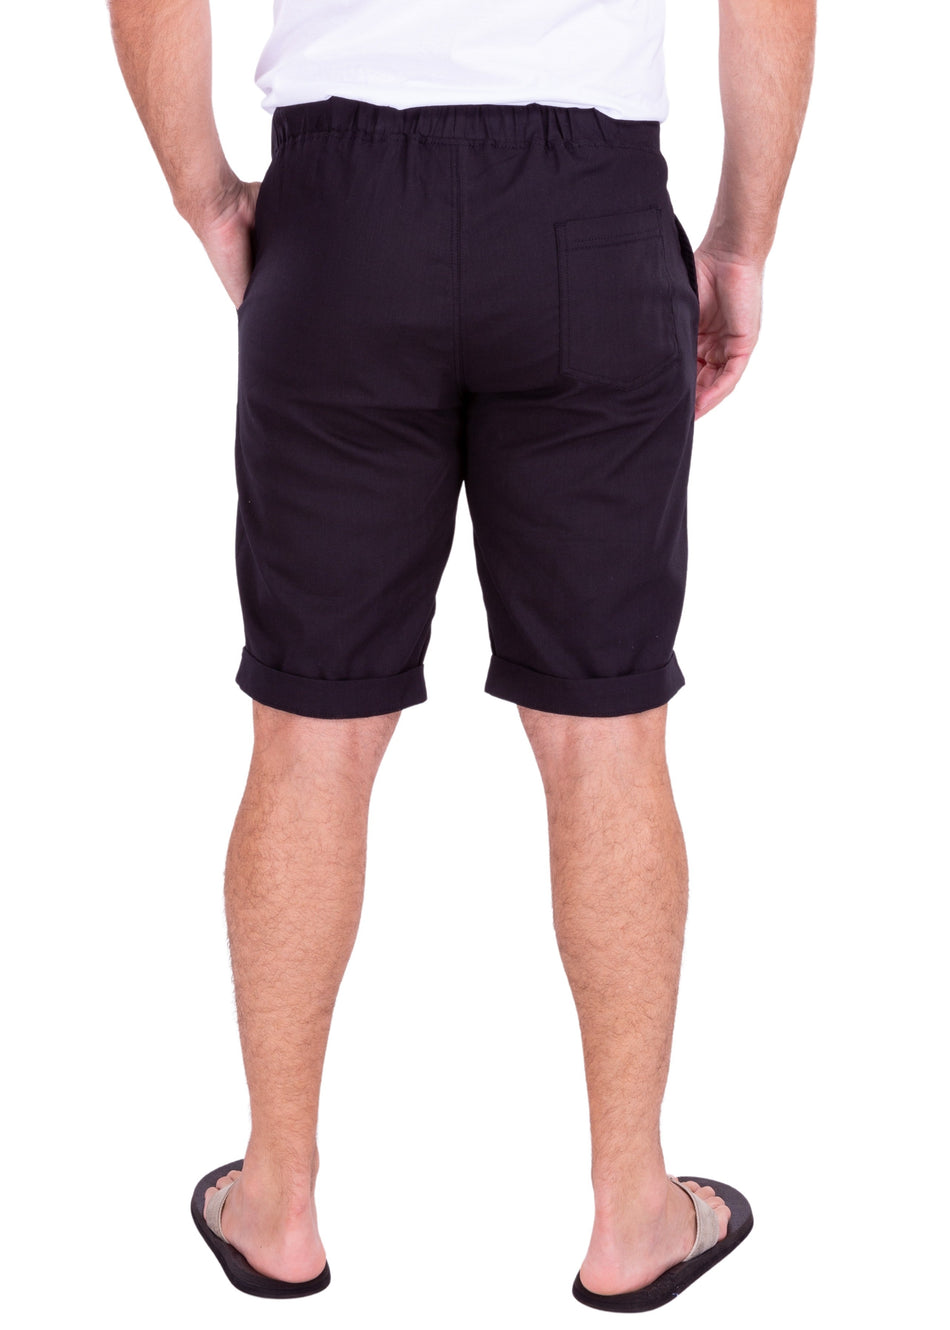 193101 - Black Linen Shorts